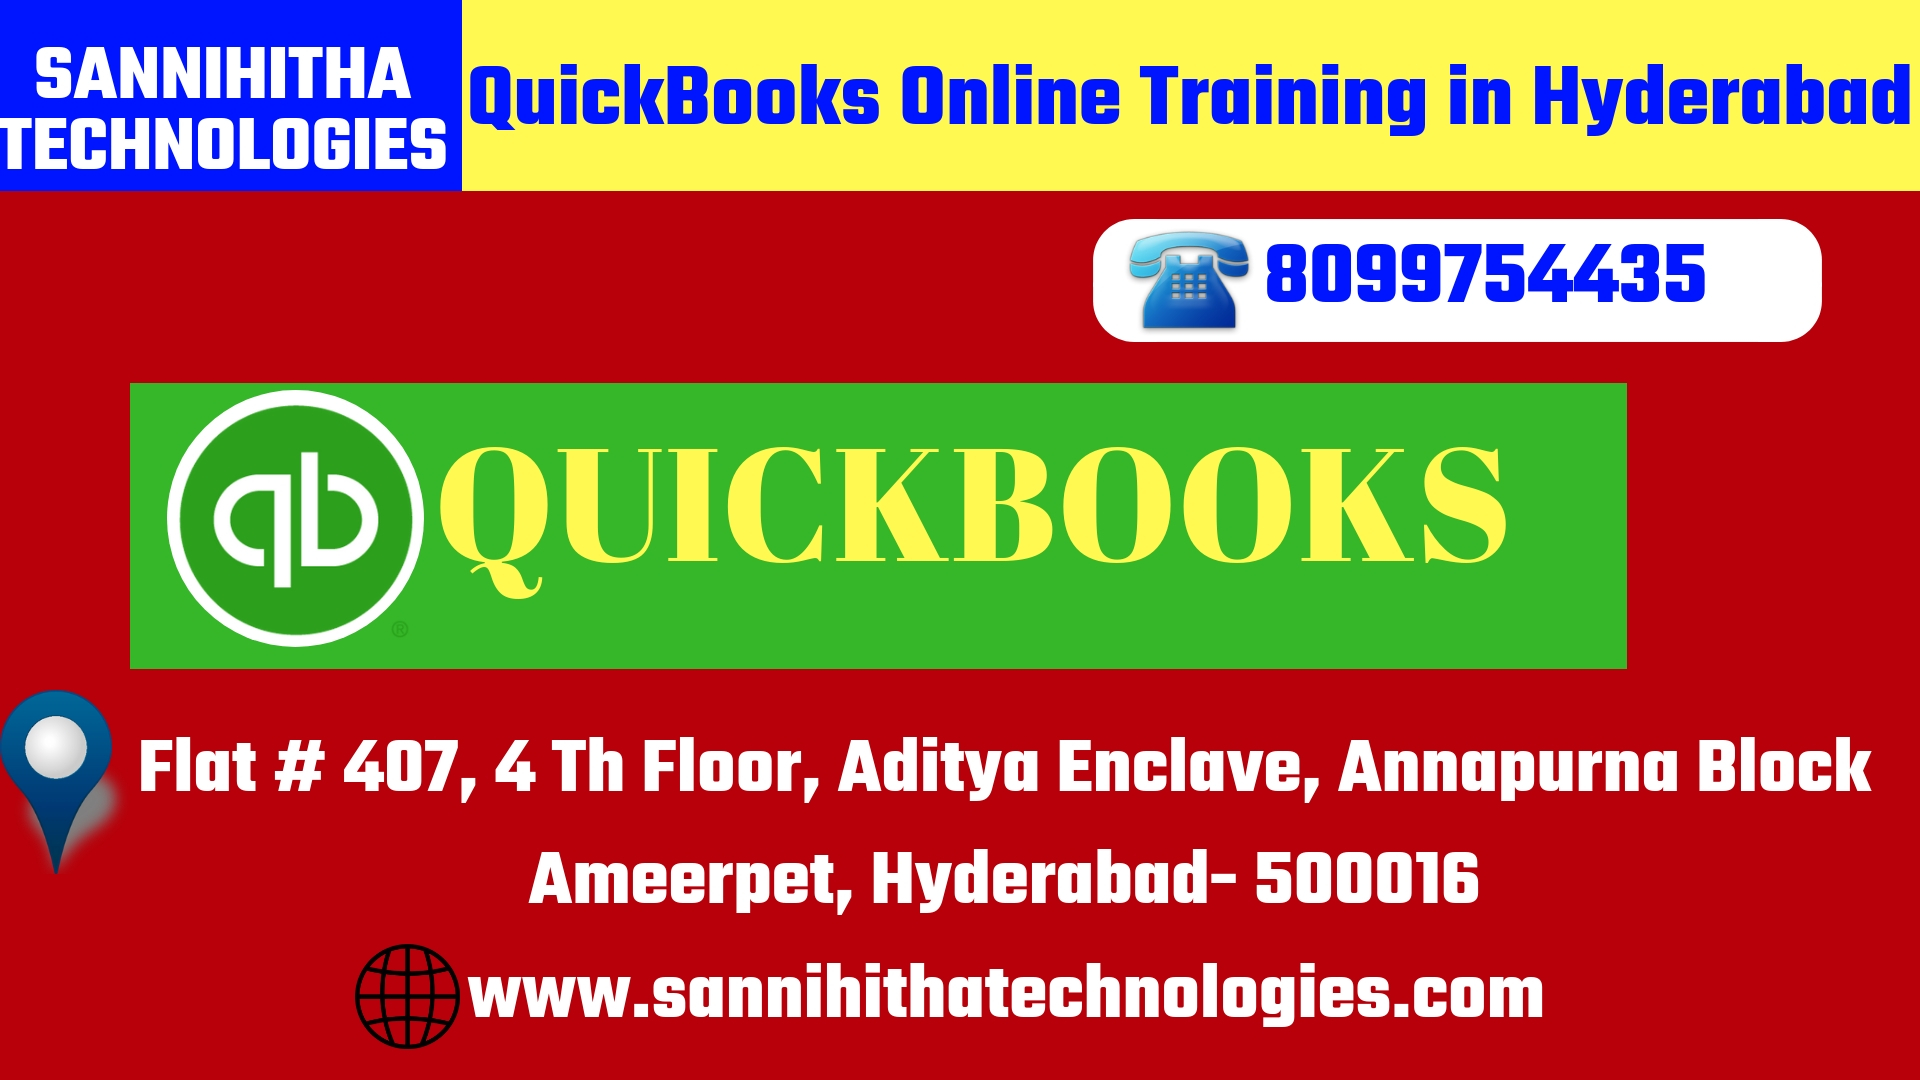 QuickBooks Training in Hyderabad, Hyderabad, Andhra Pradesh, India